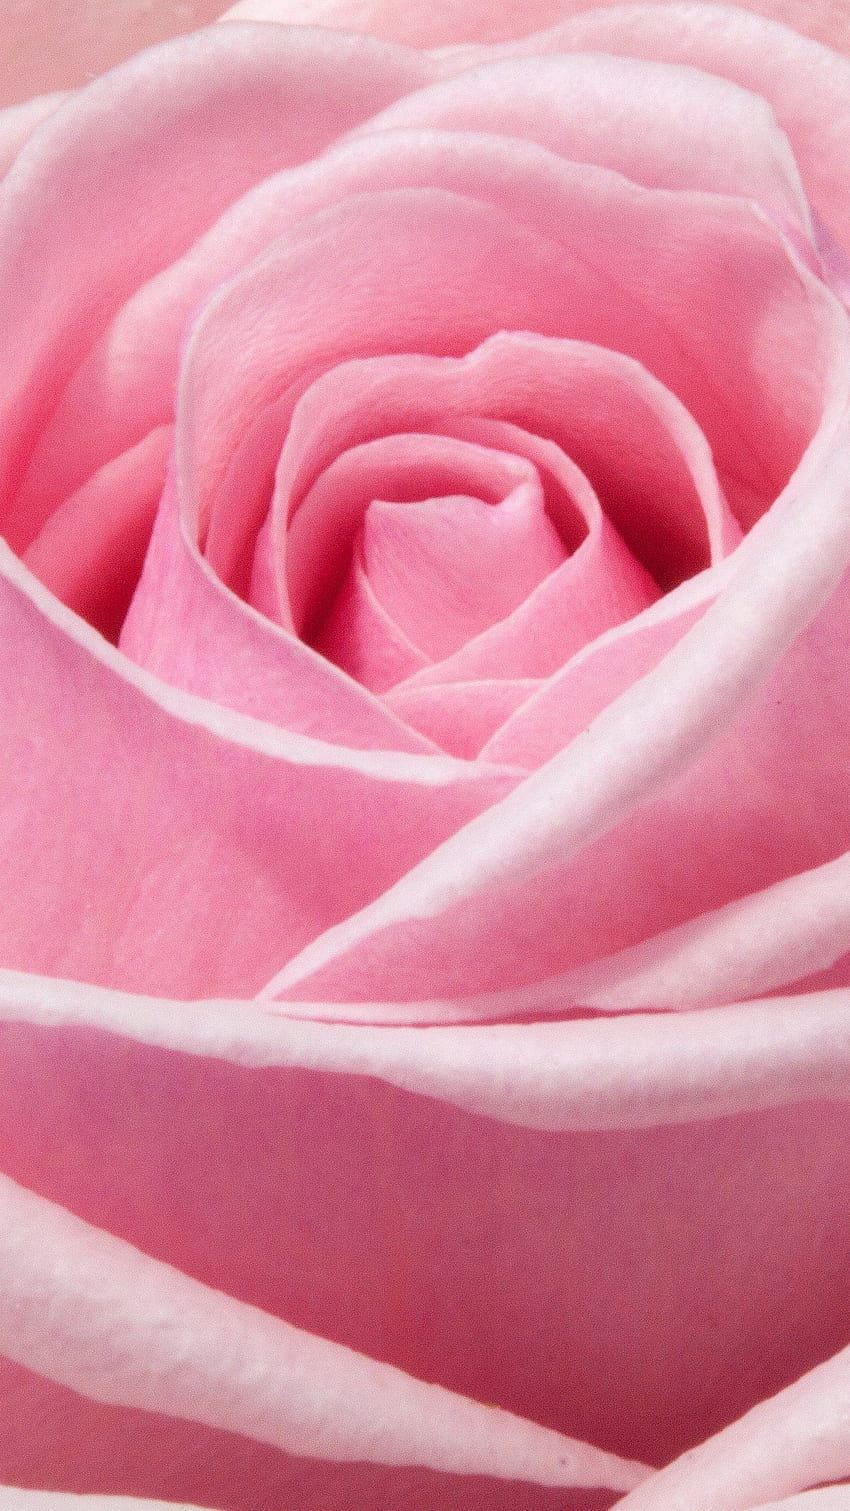 Pink Rose - iPhone, Android & Latar Belakang, Ponsel Pink Roses wallpaper ponsel HD